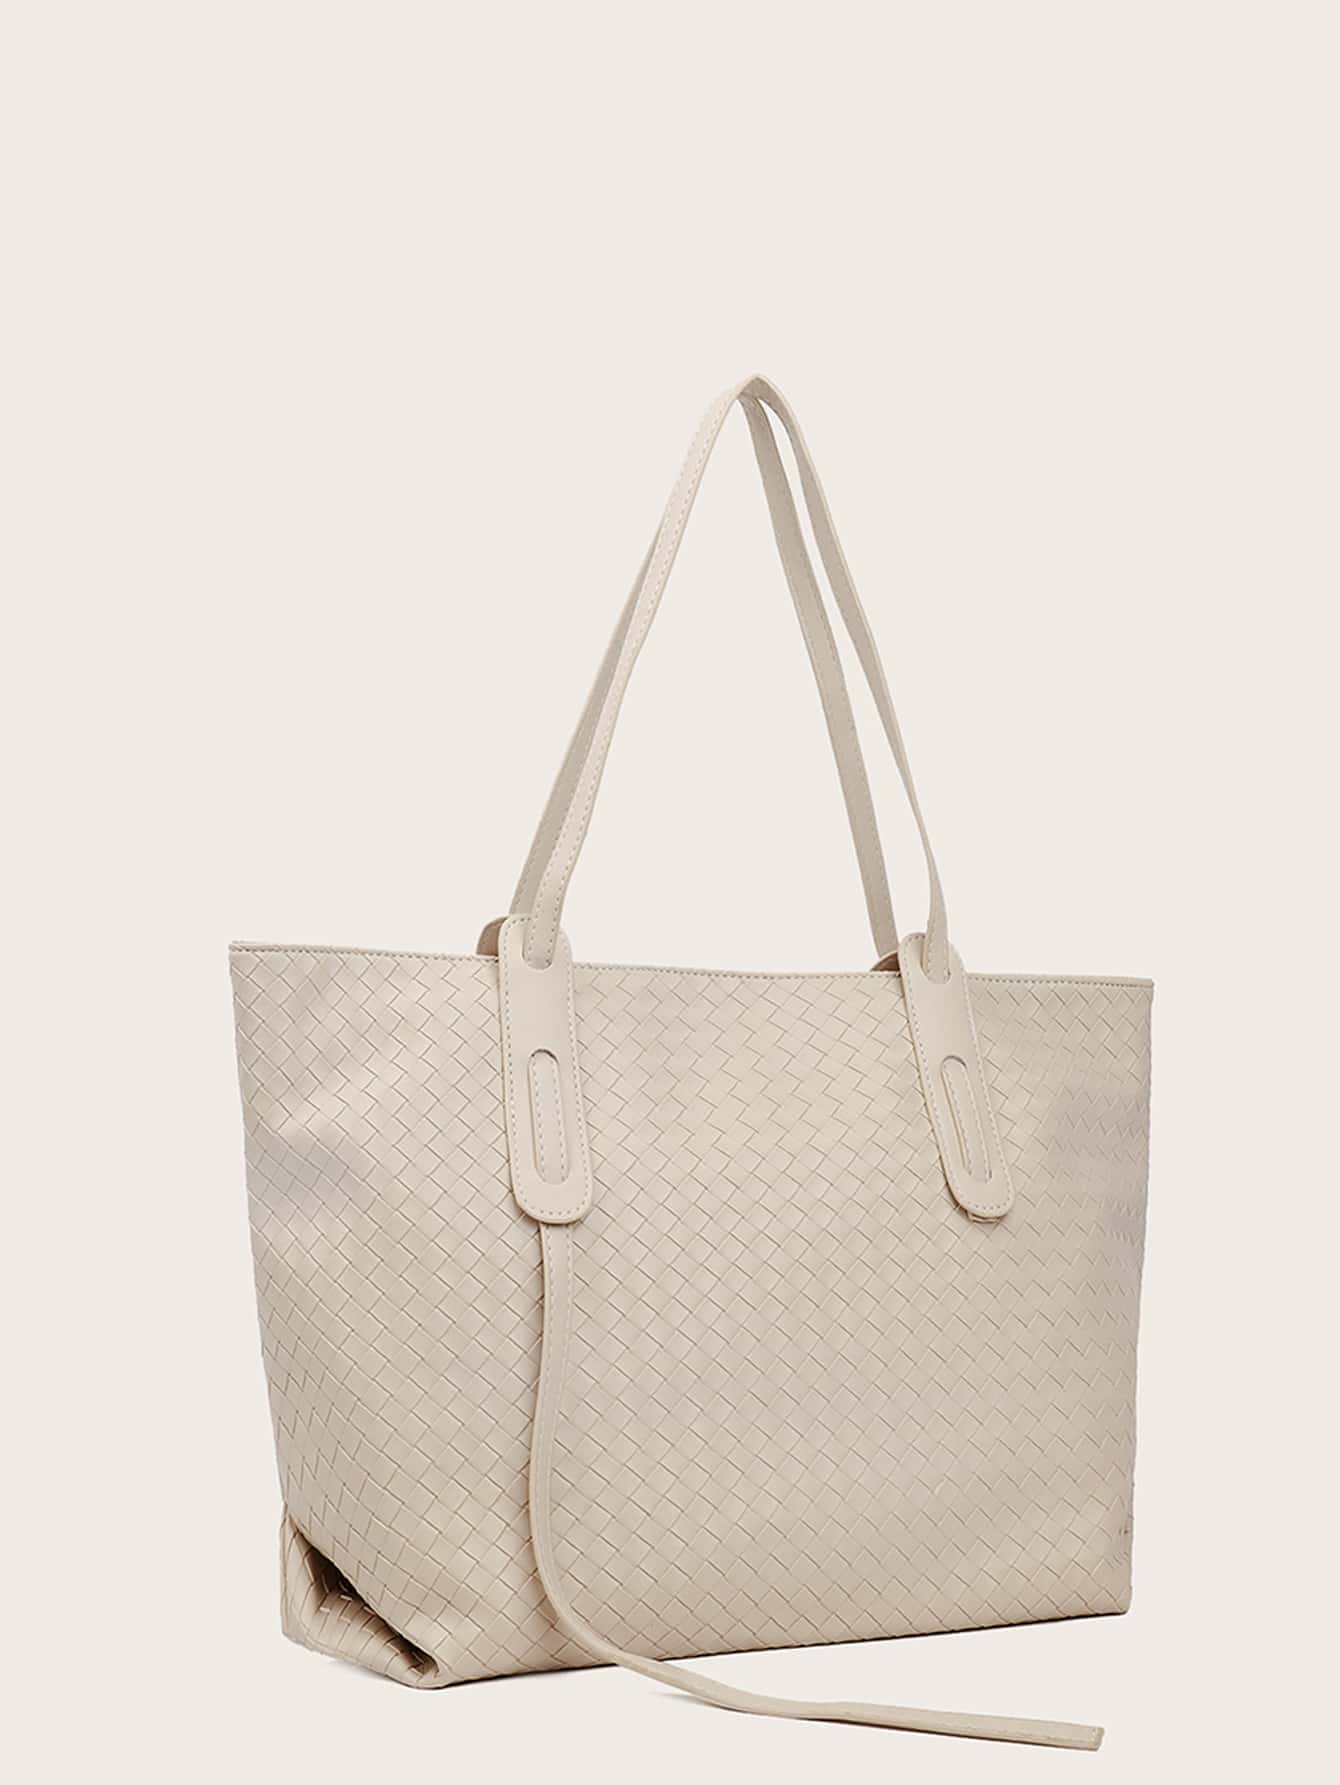 Braided Design Tote Bag